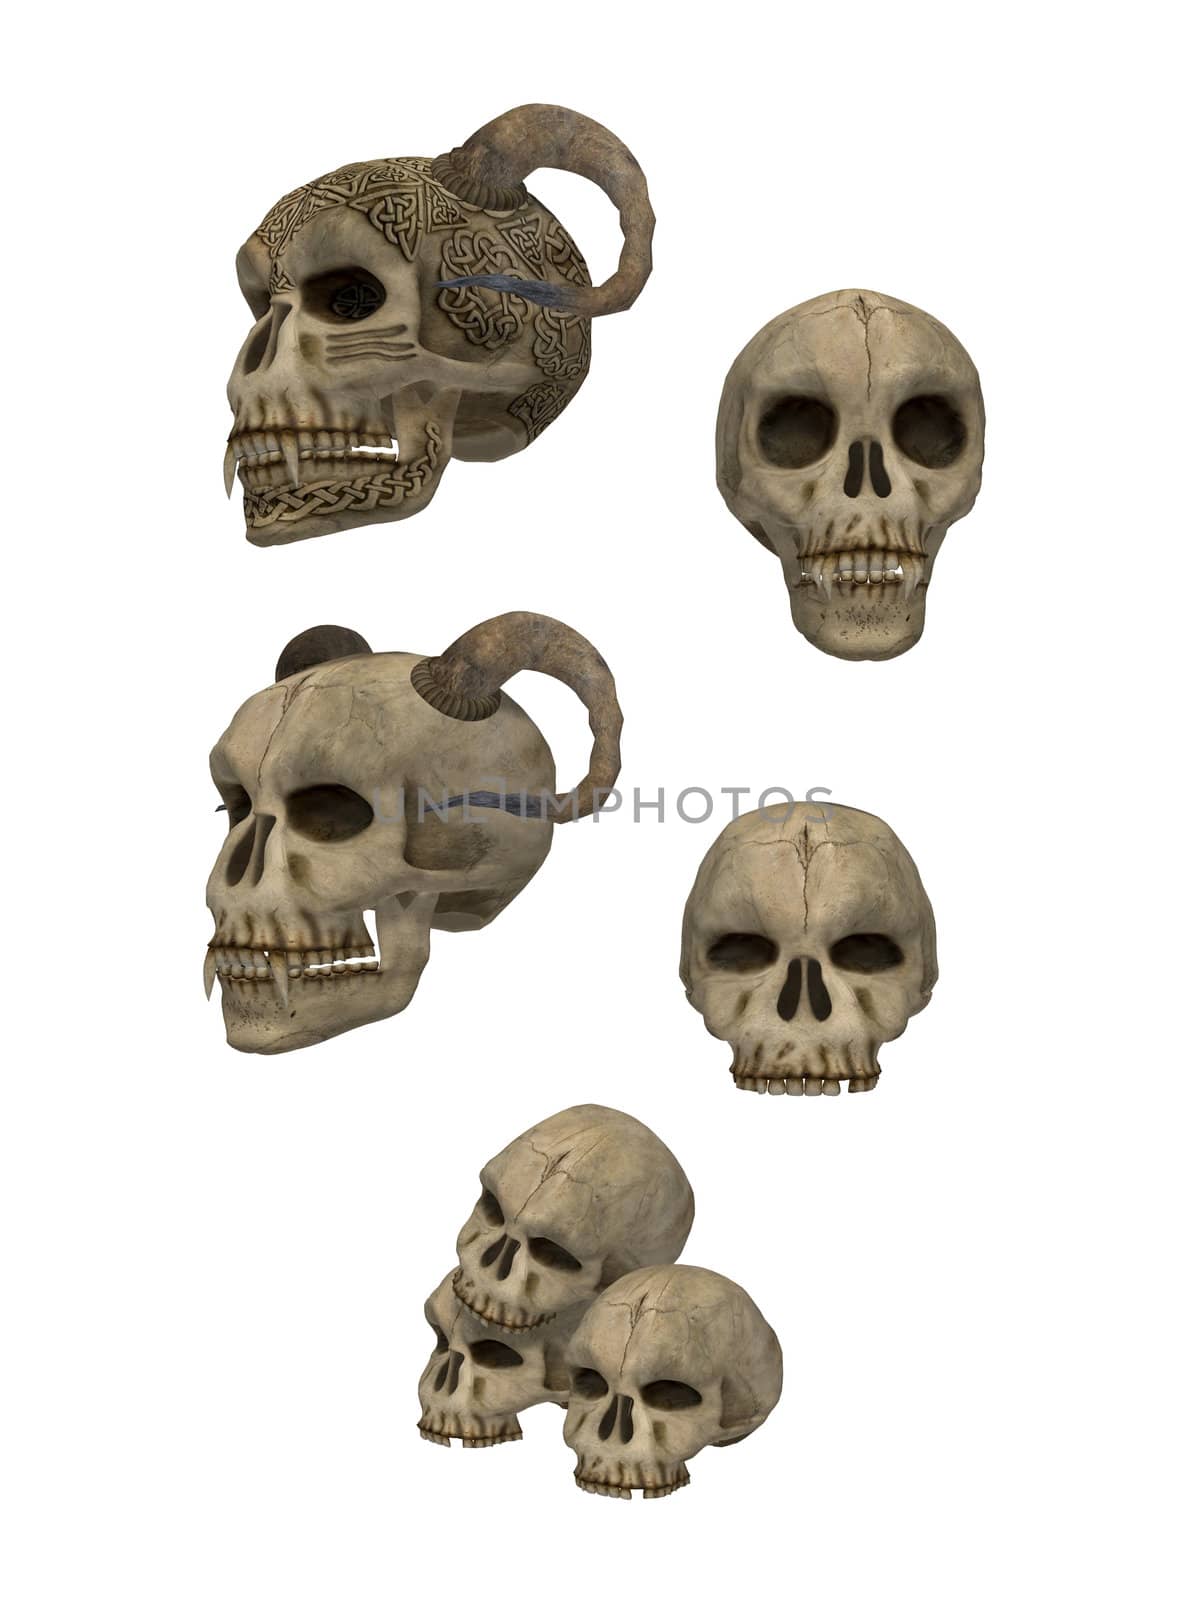 Skulls by kathygold